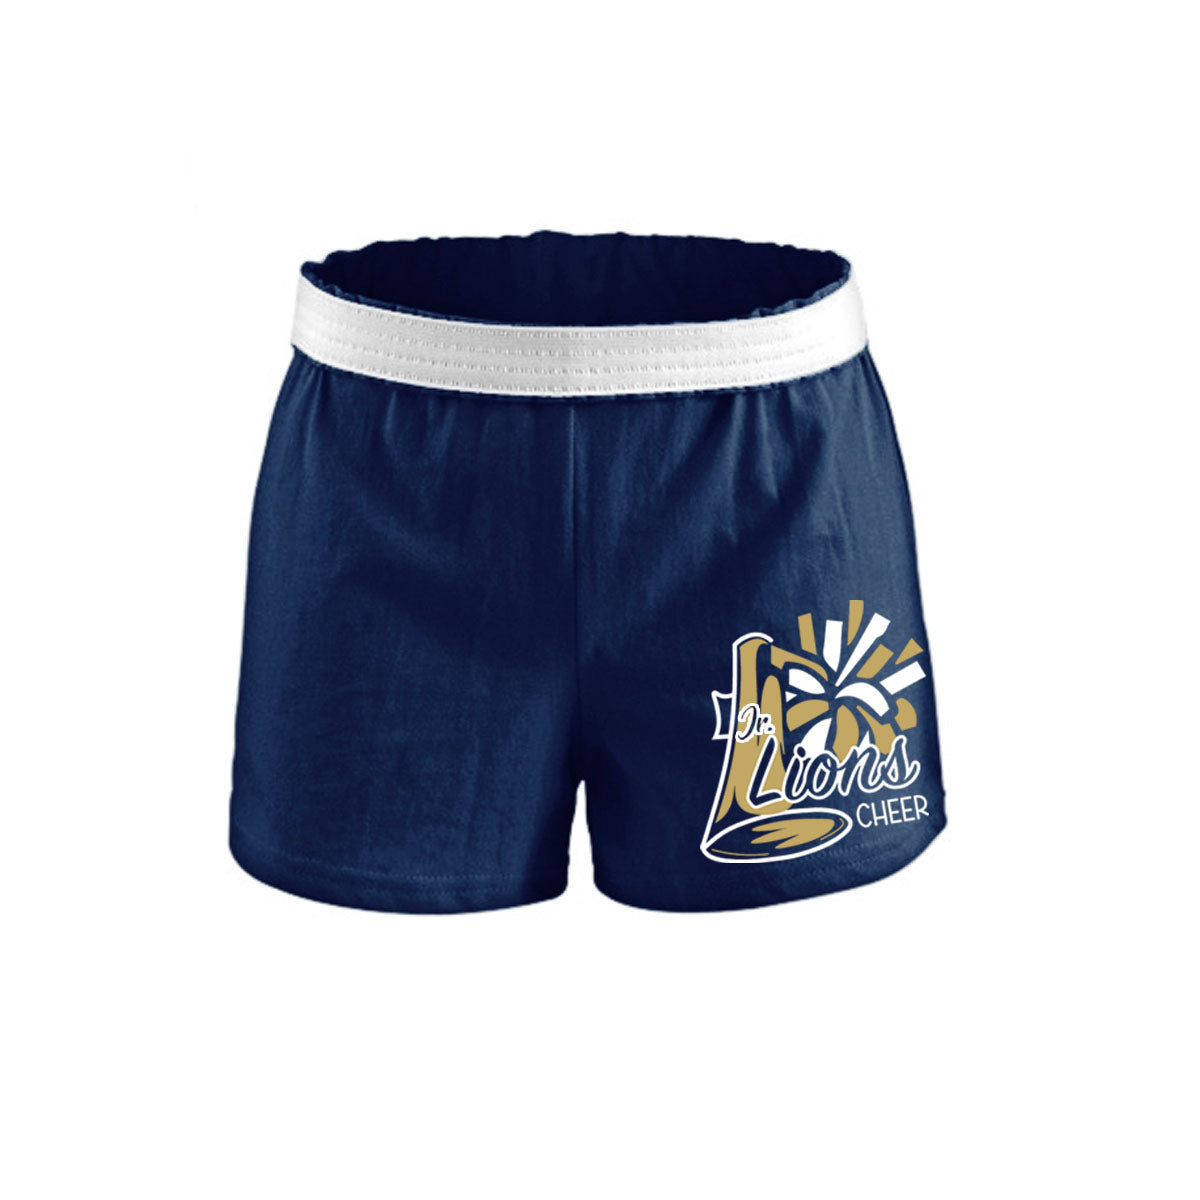 Lions Cheer Design 2 Shorts